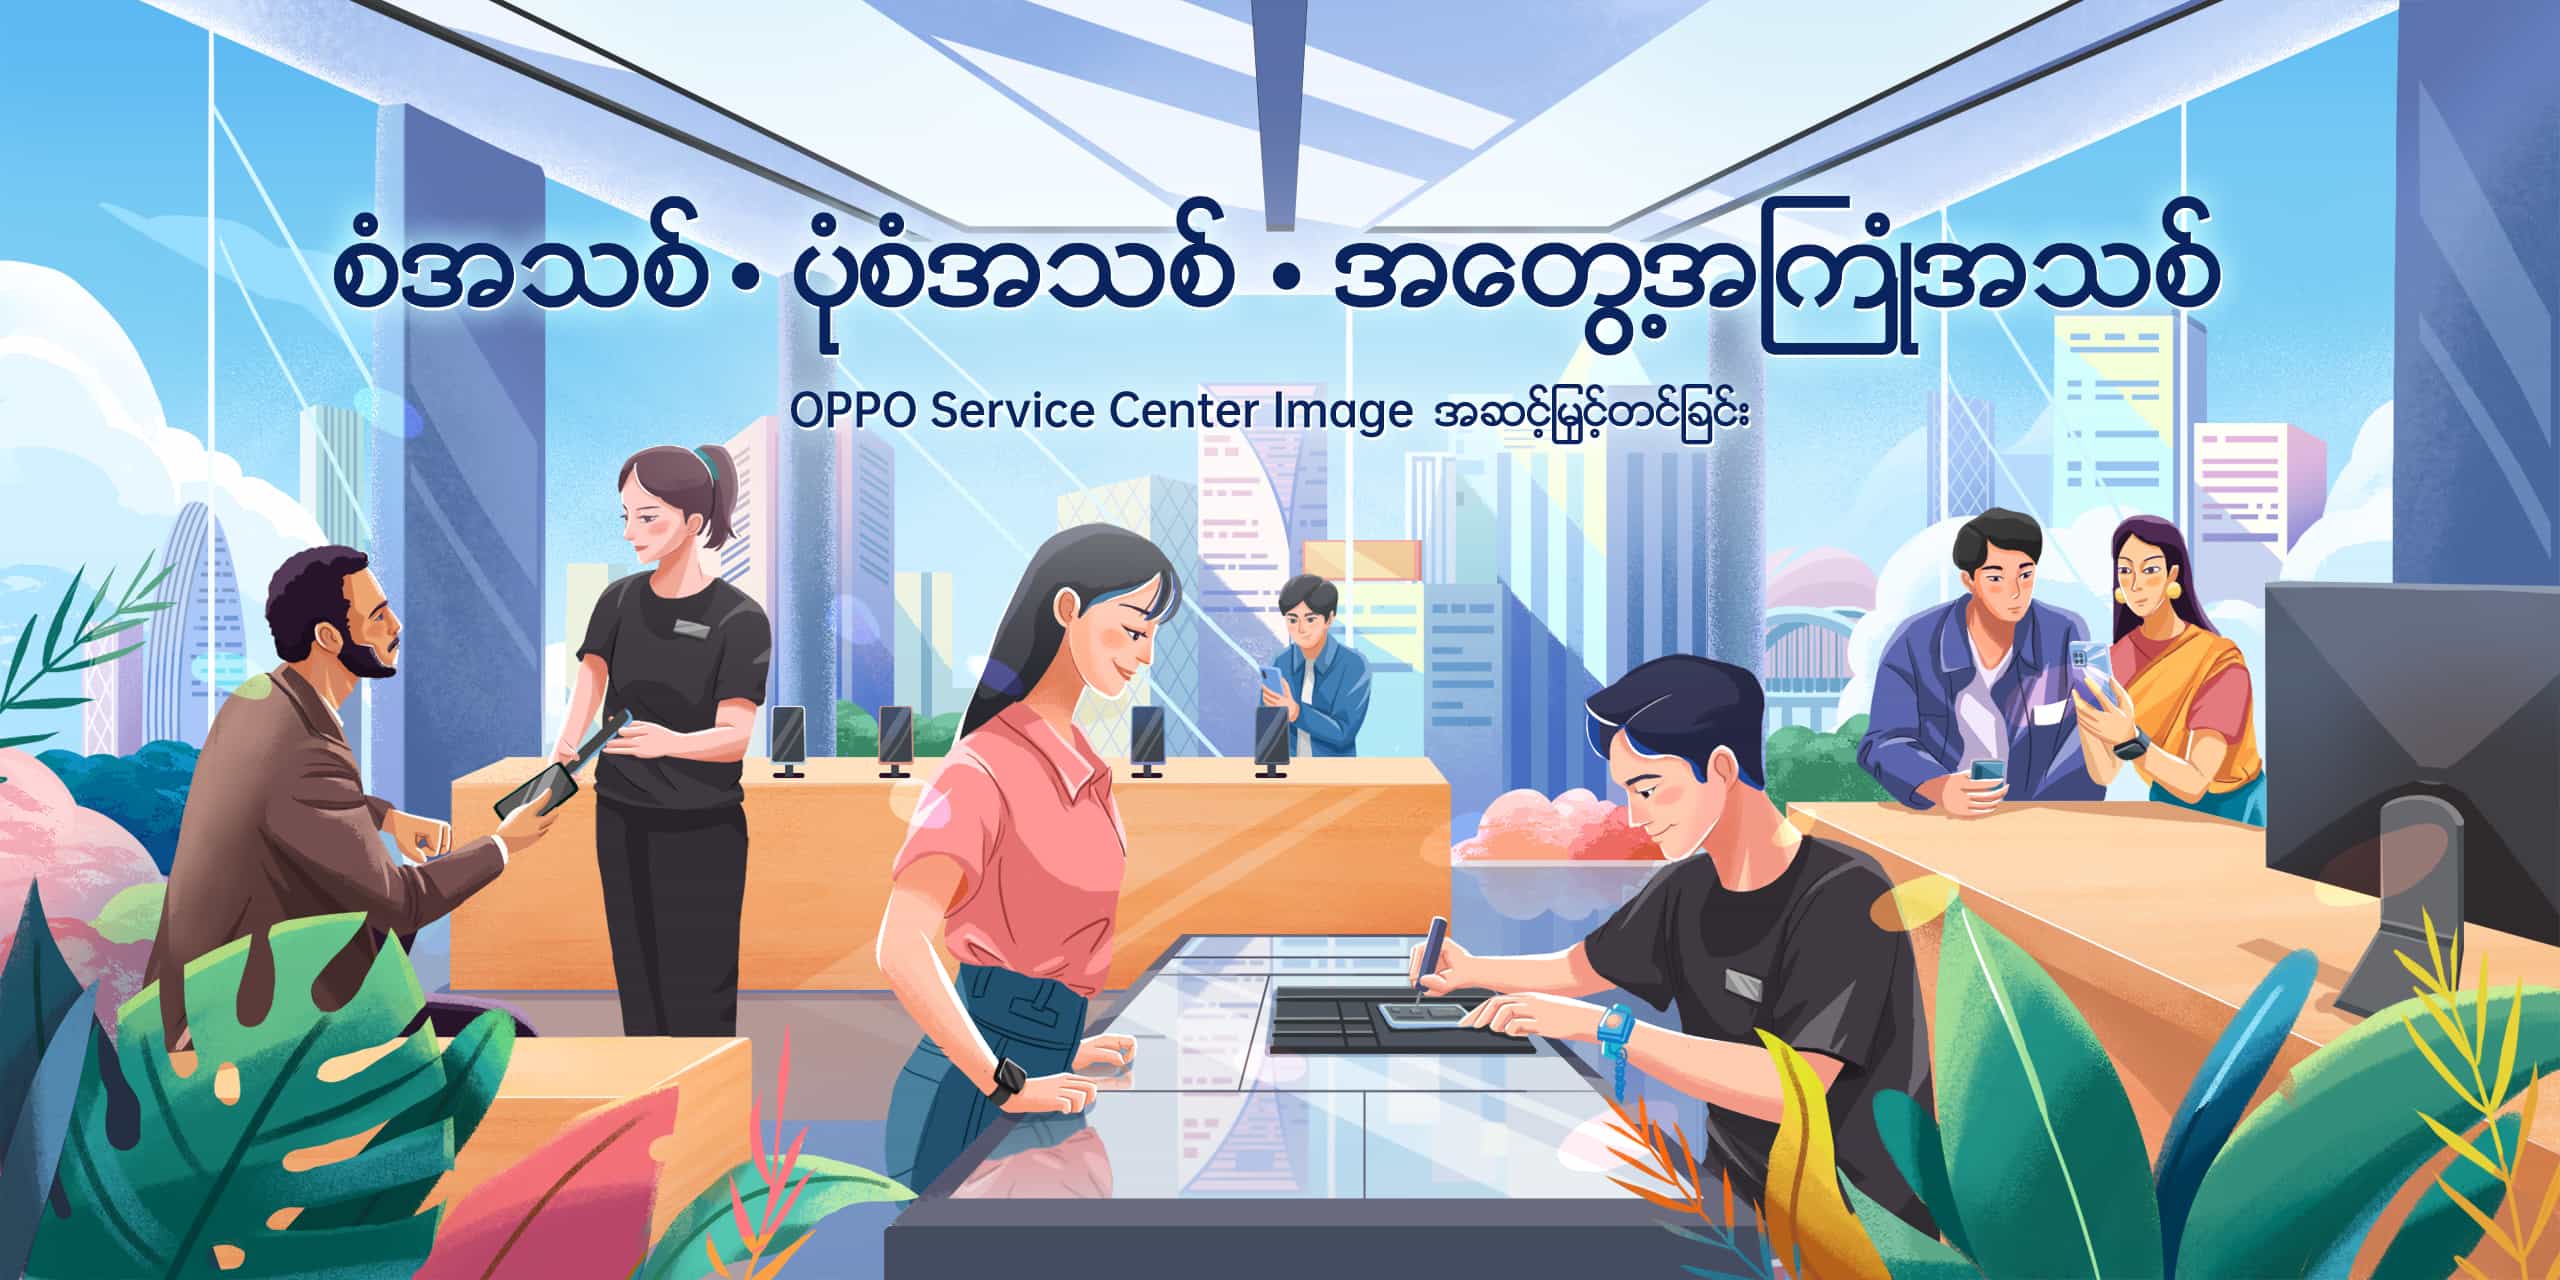 OPPO Service Center Image အဆင့်မြှင့်တင်ခြင်း